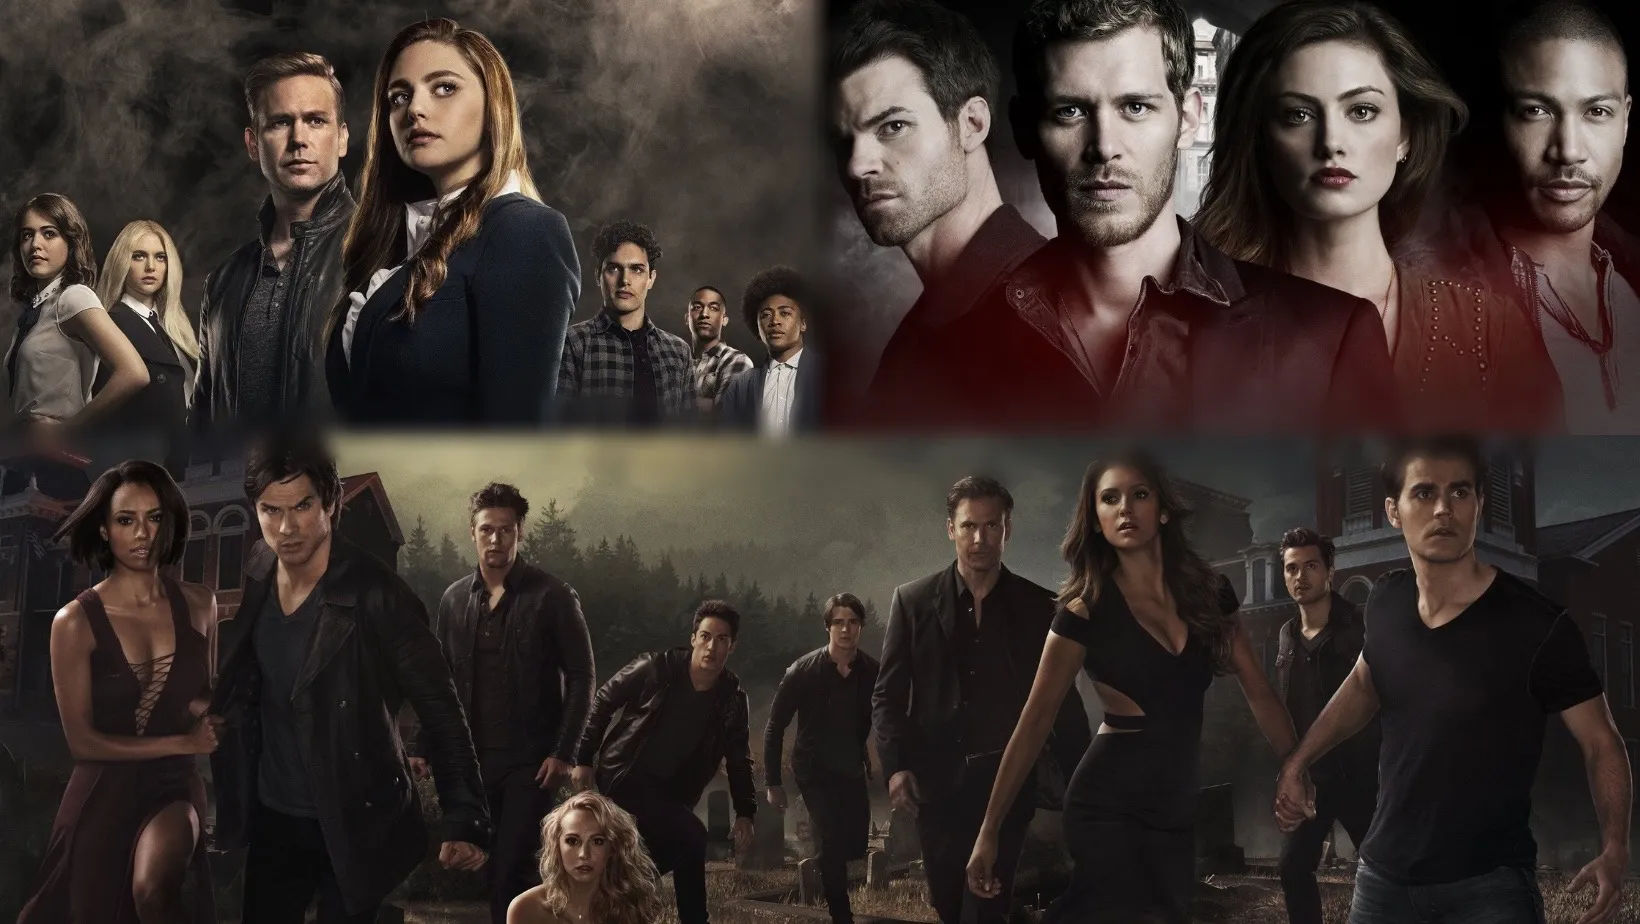 Who Are the Originals in Vampire Diaries?